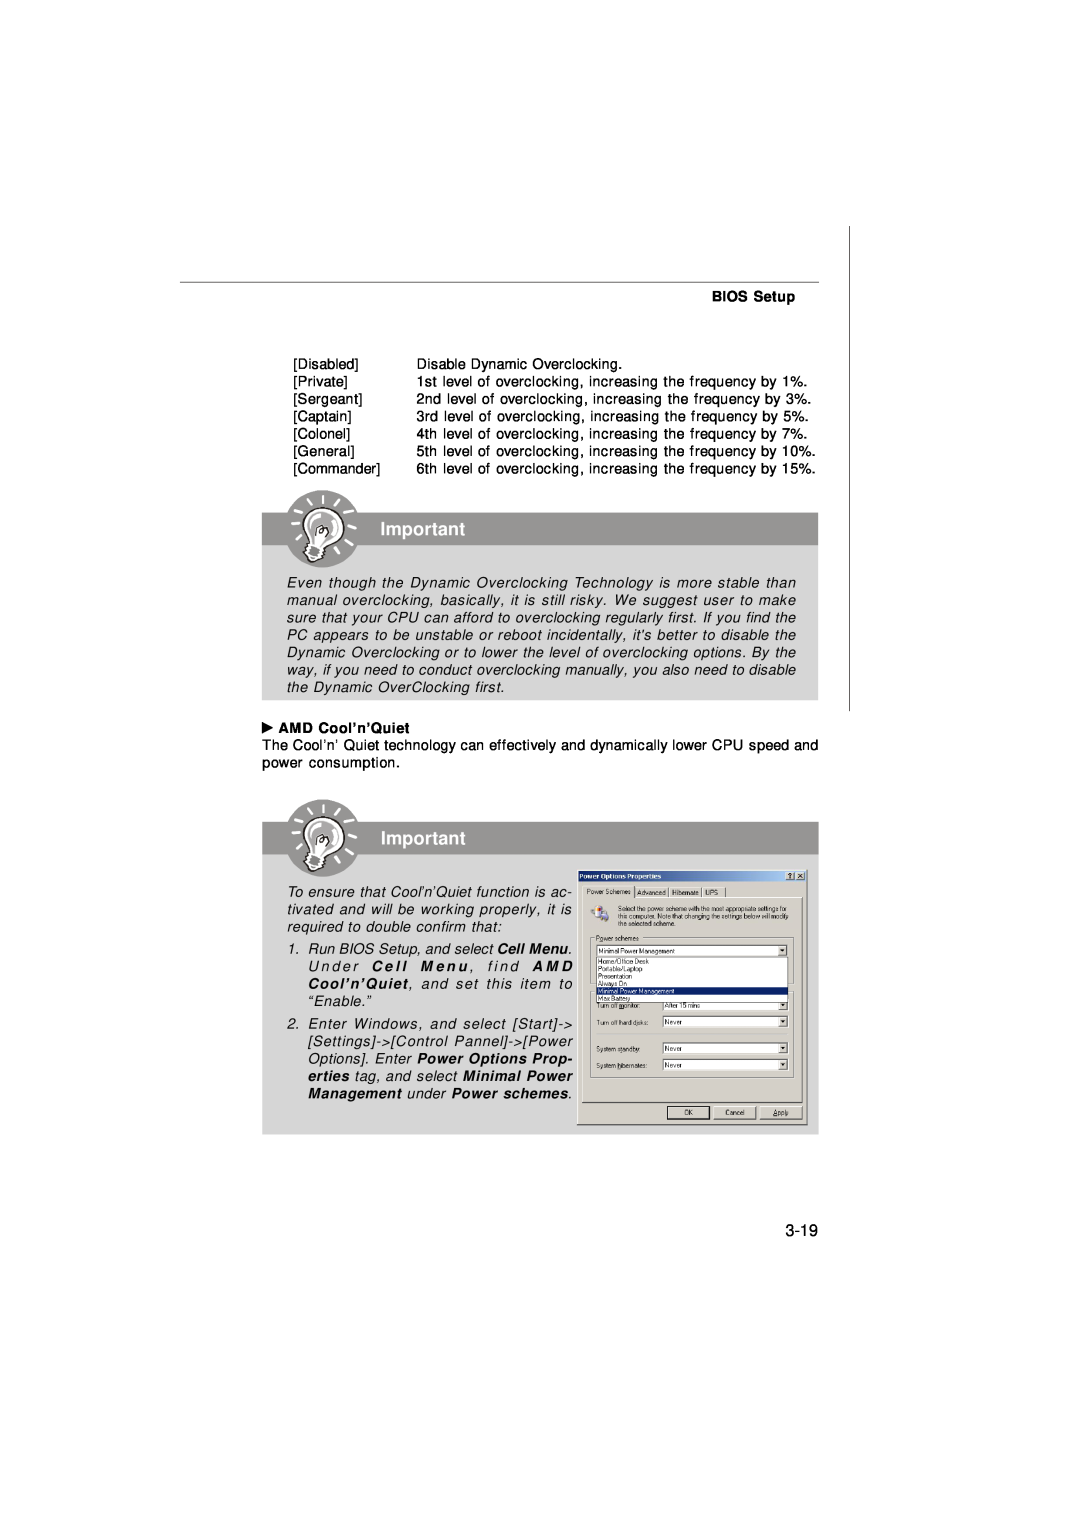 Nvidia MS-7374 manual 3-19, AMD Cool’n’Quiet, BIOS Setup, “ Enable.” 